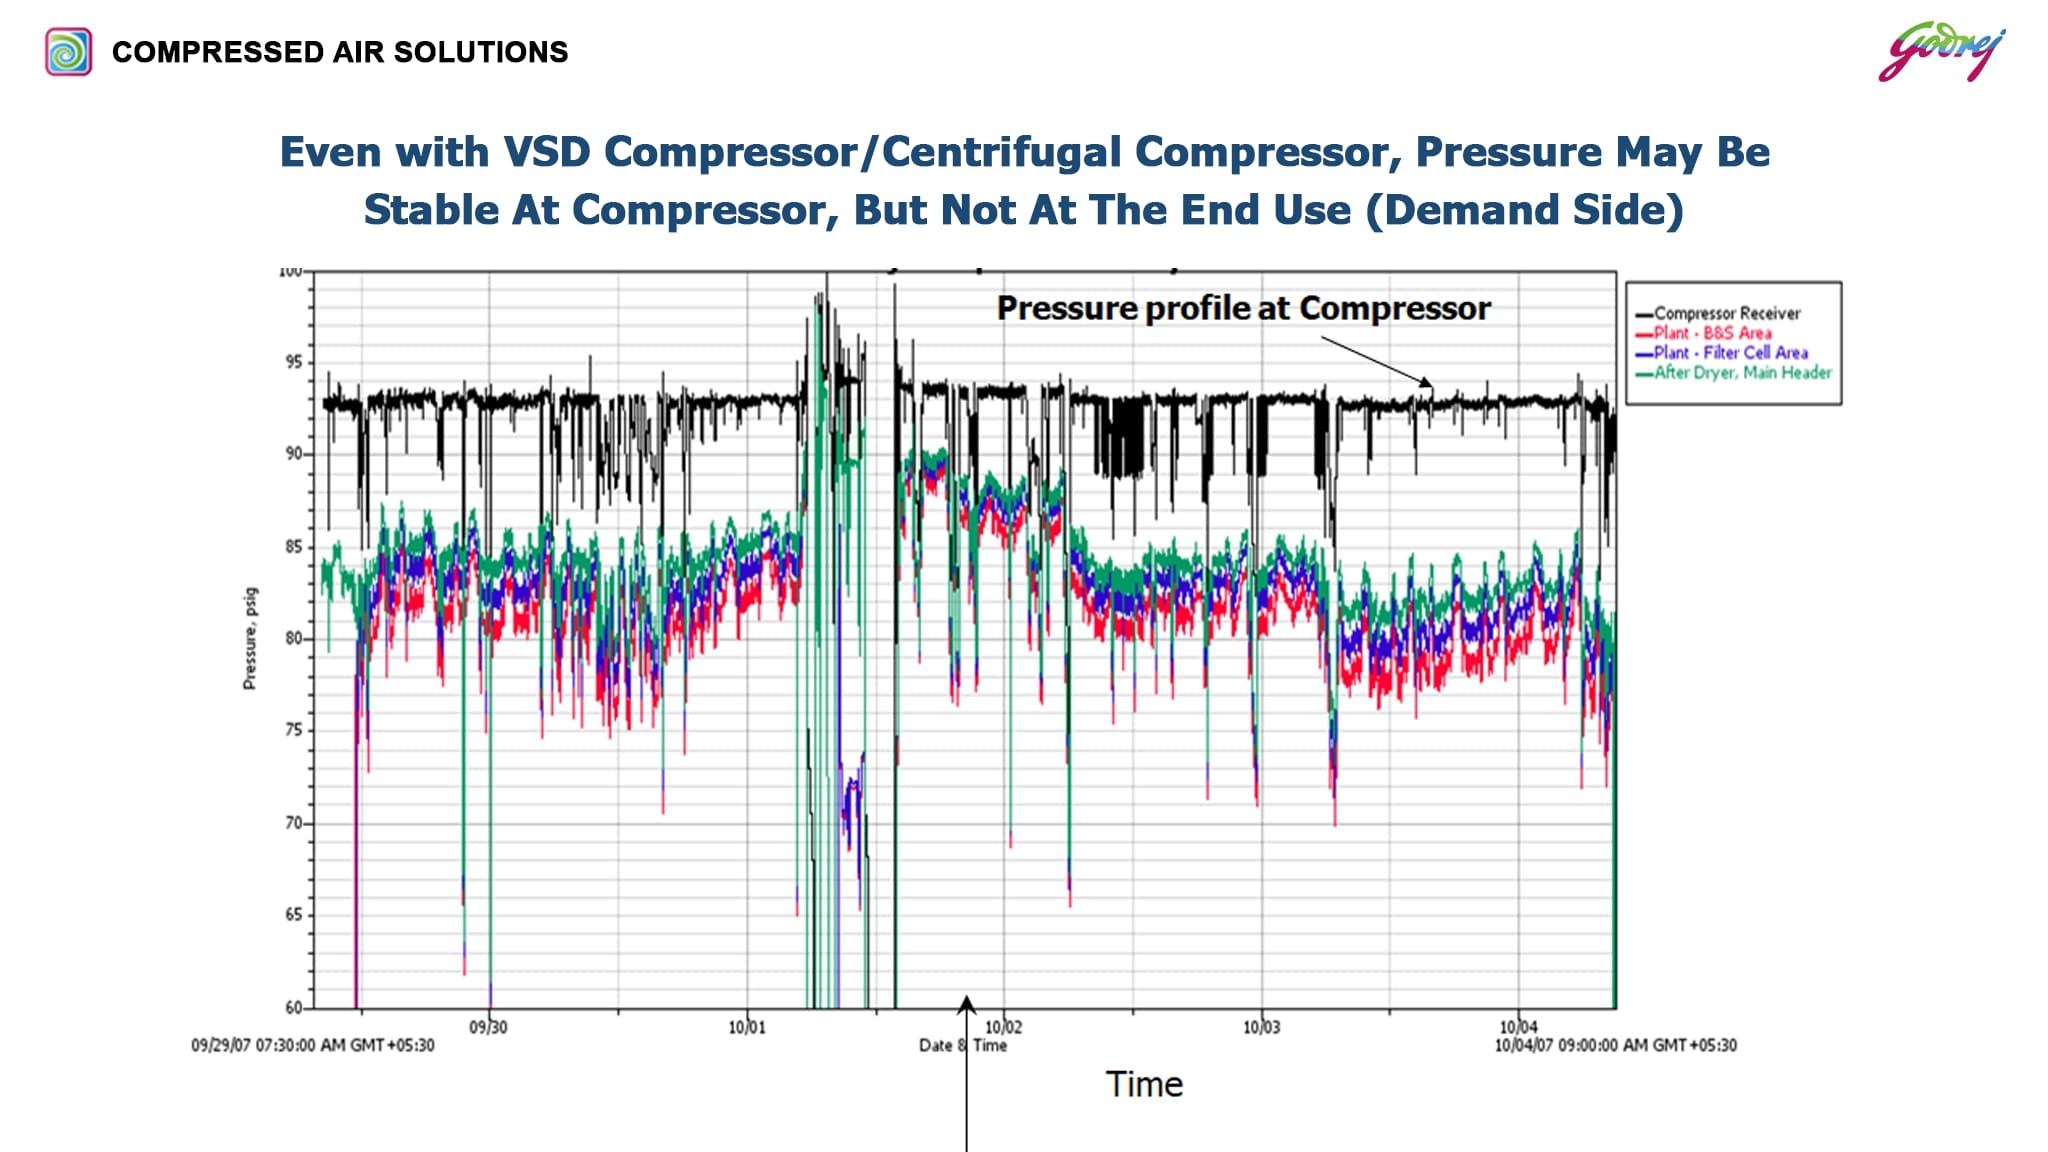 VSD Compressor/Centrifugal Compressor, Pressure-ENERGY SAVING SOLUTIONS IN COMPRESSED AIR NETWORK (GODREJ)